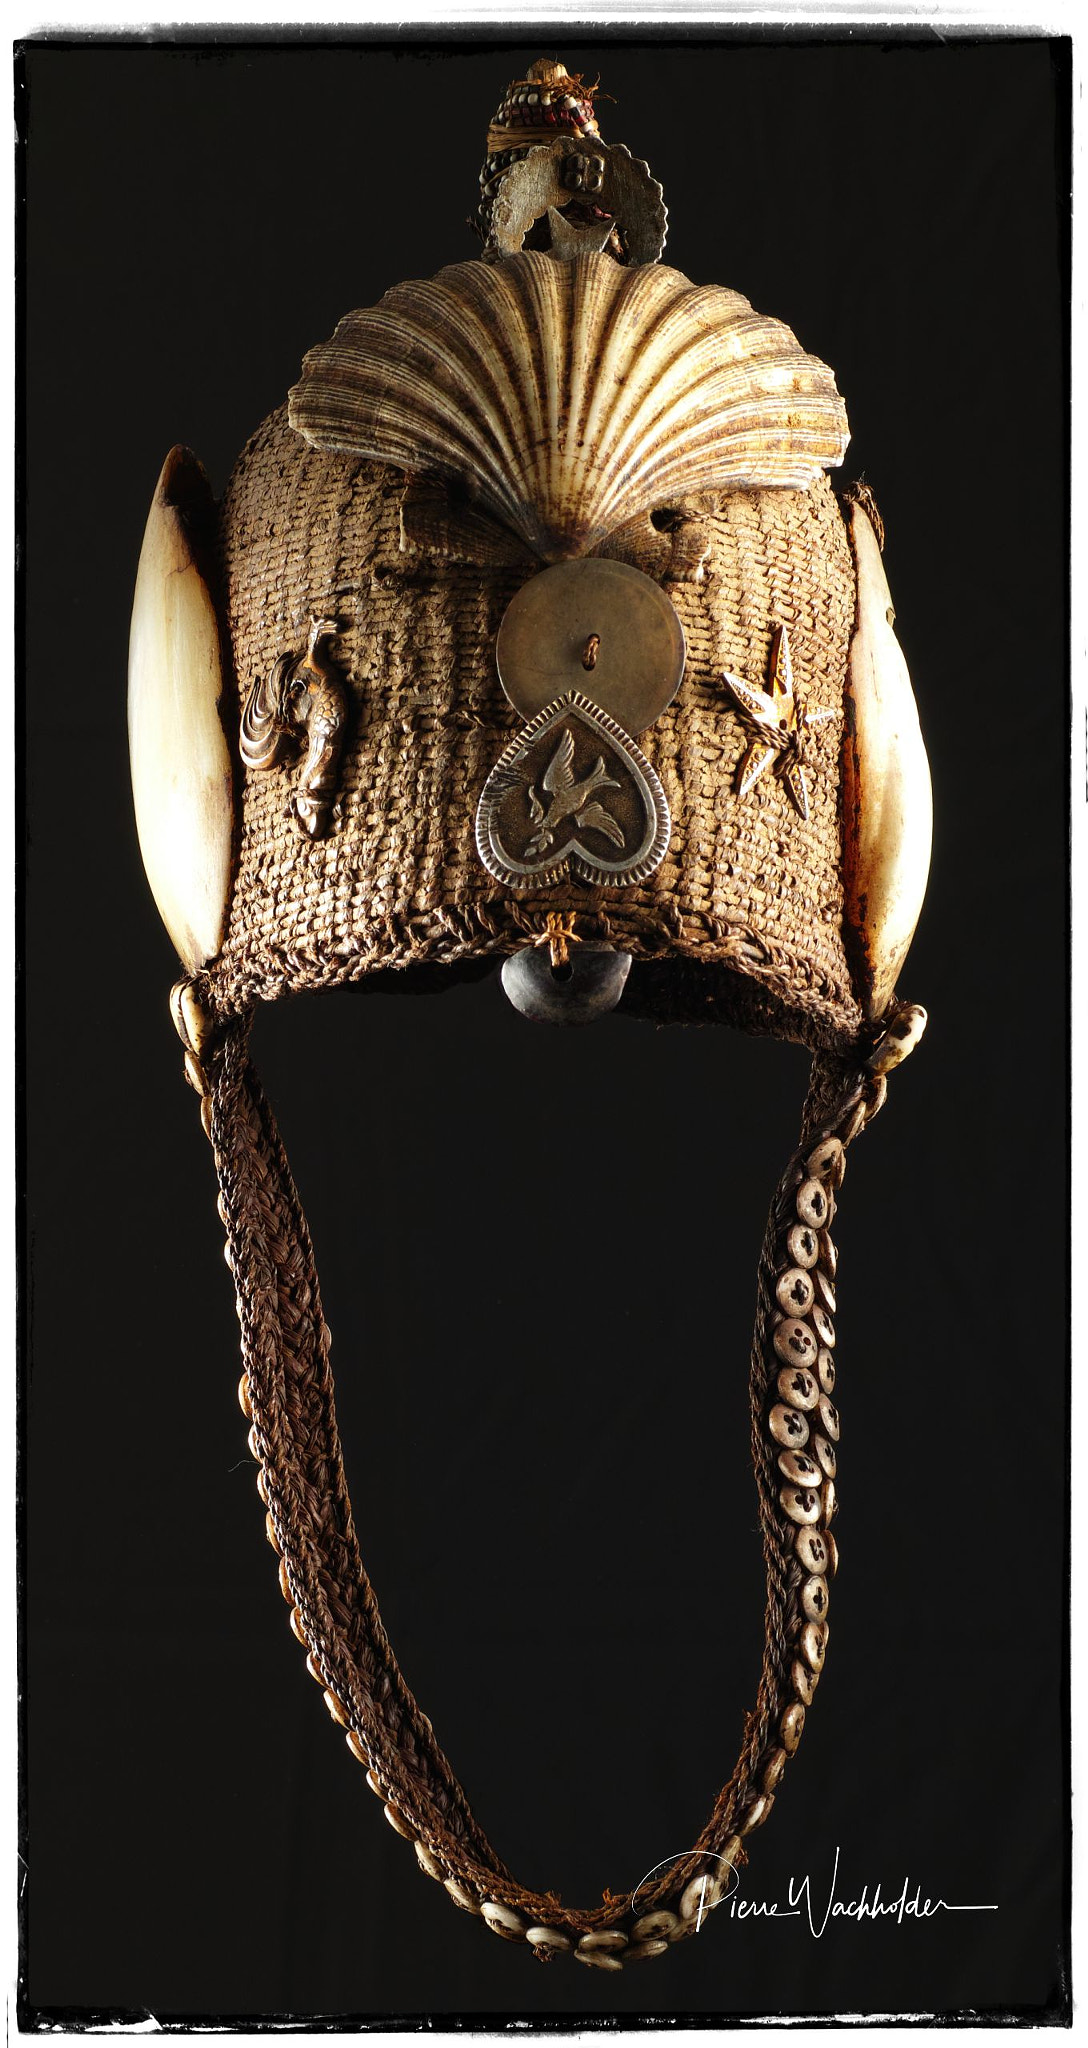 Sigma SD1 Merrill sample photo. Helmet, dr congo, musee africain de namur photography